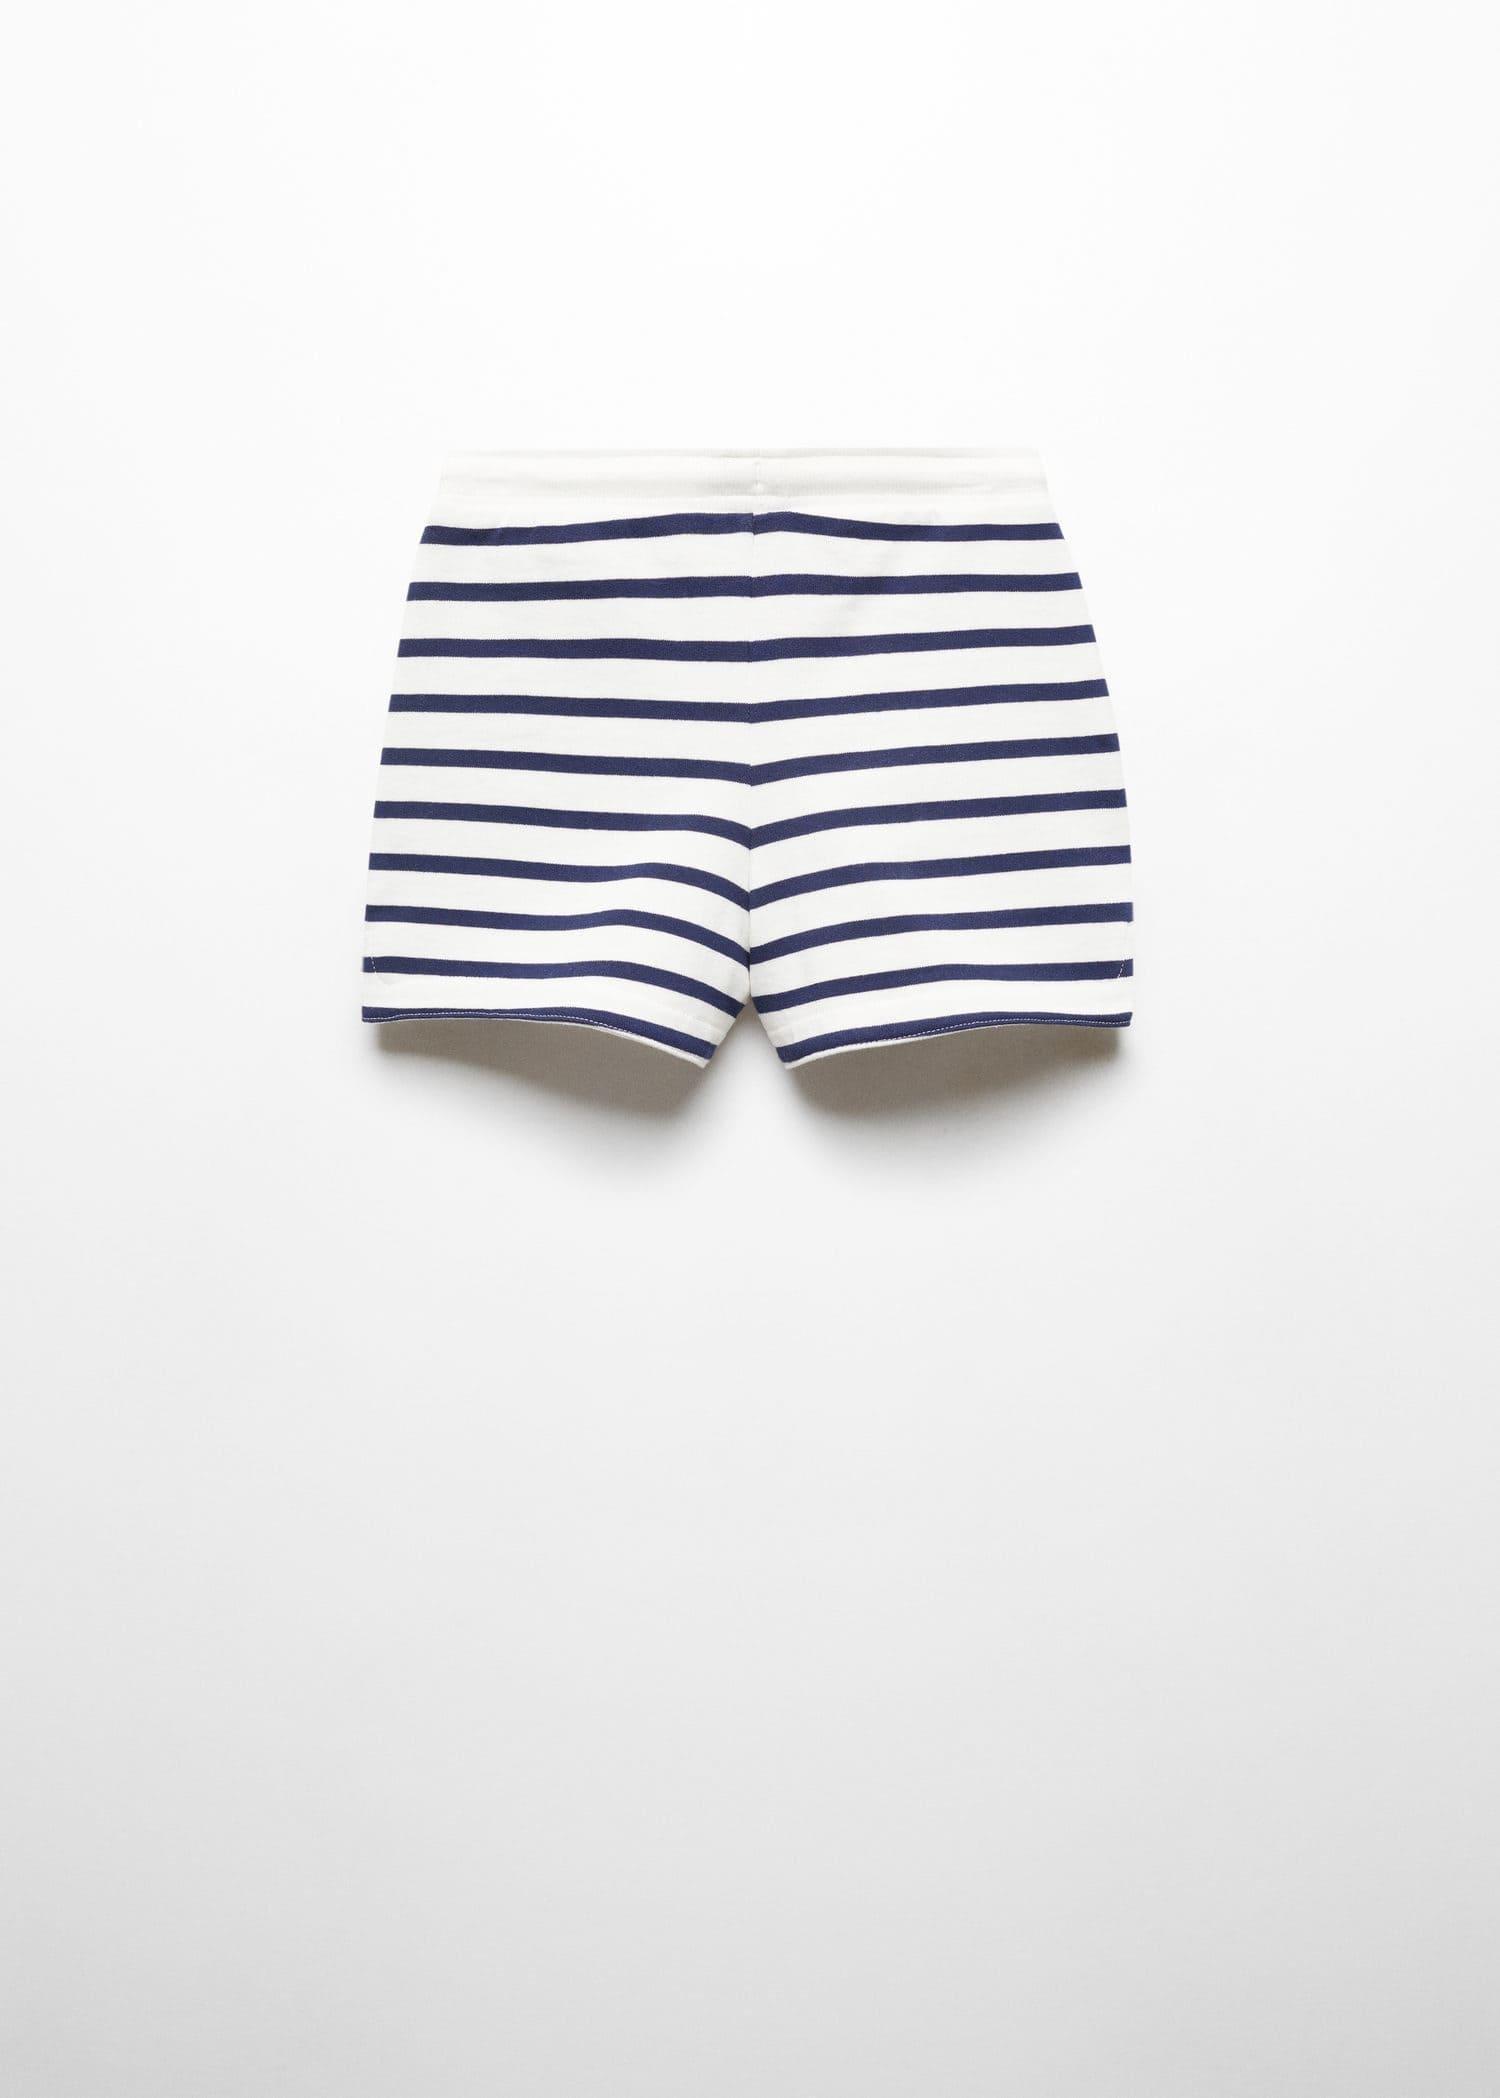 Mango - White Striped Cotton Shorts, Kids Girls